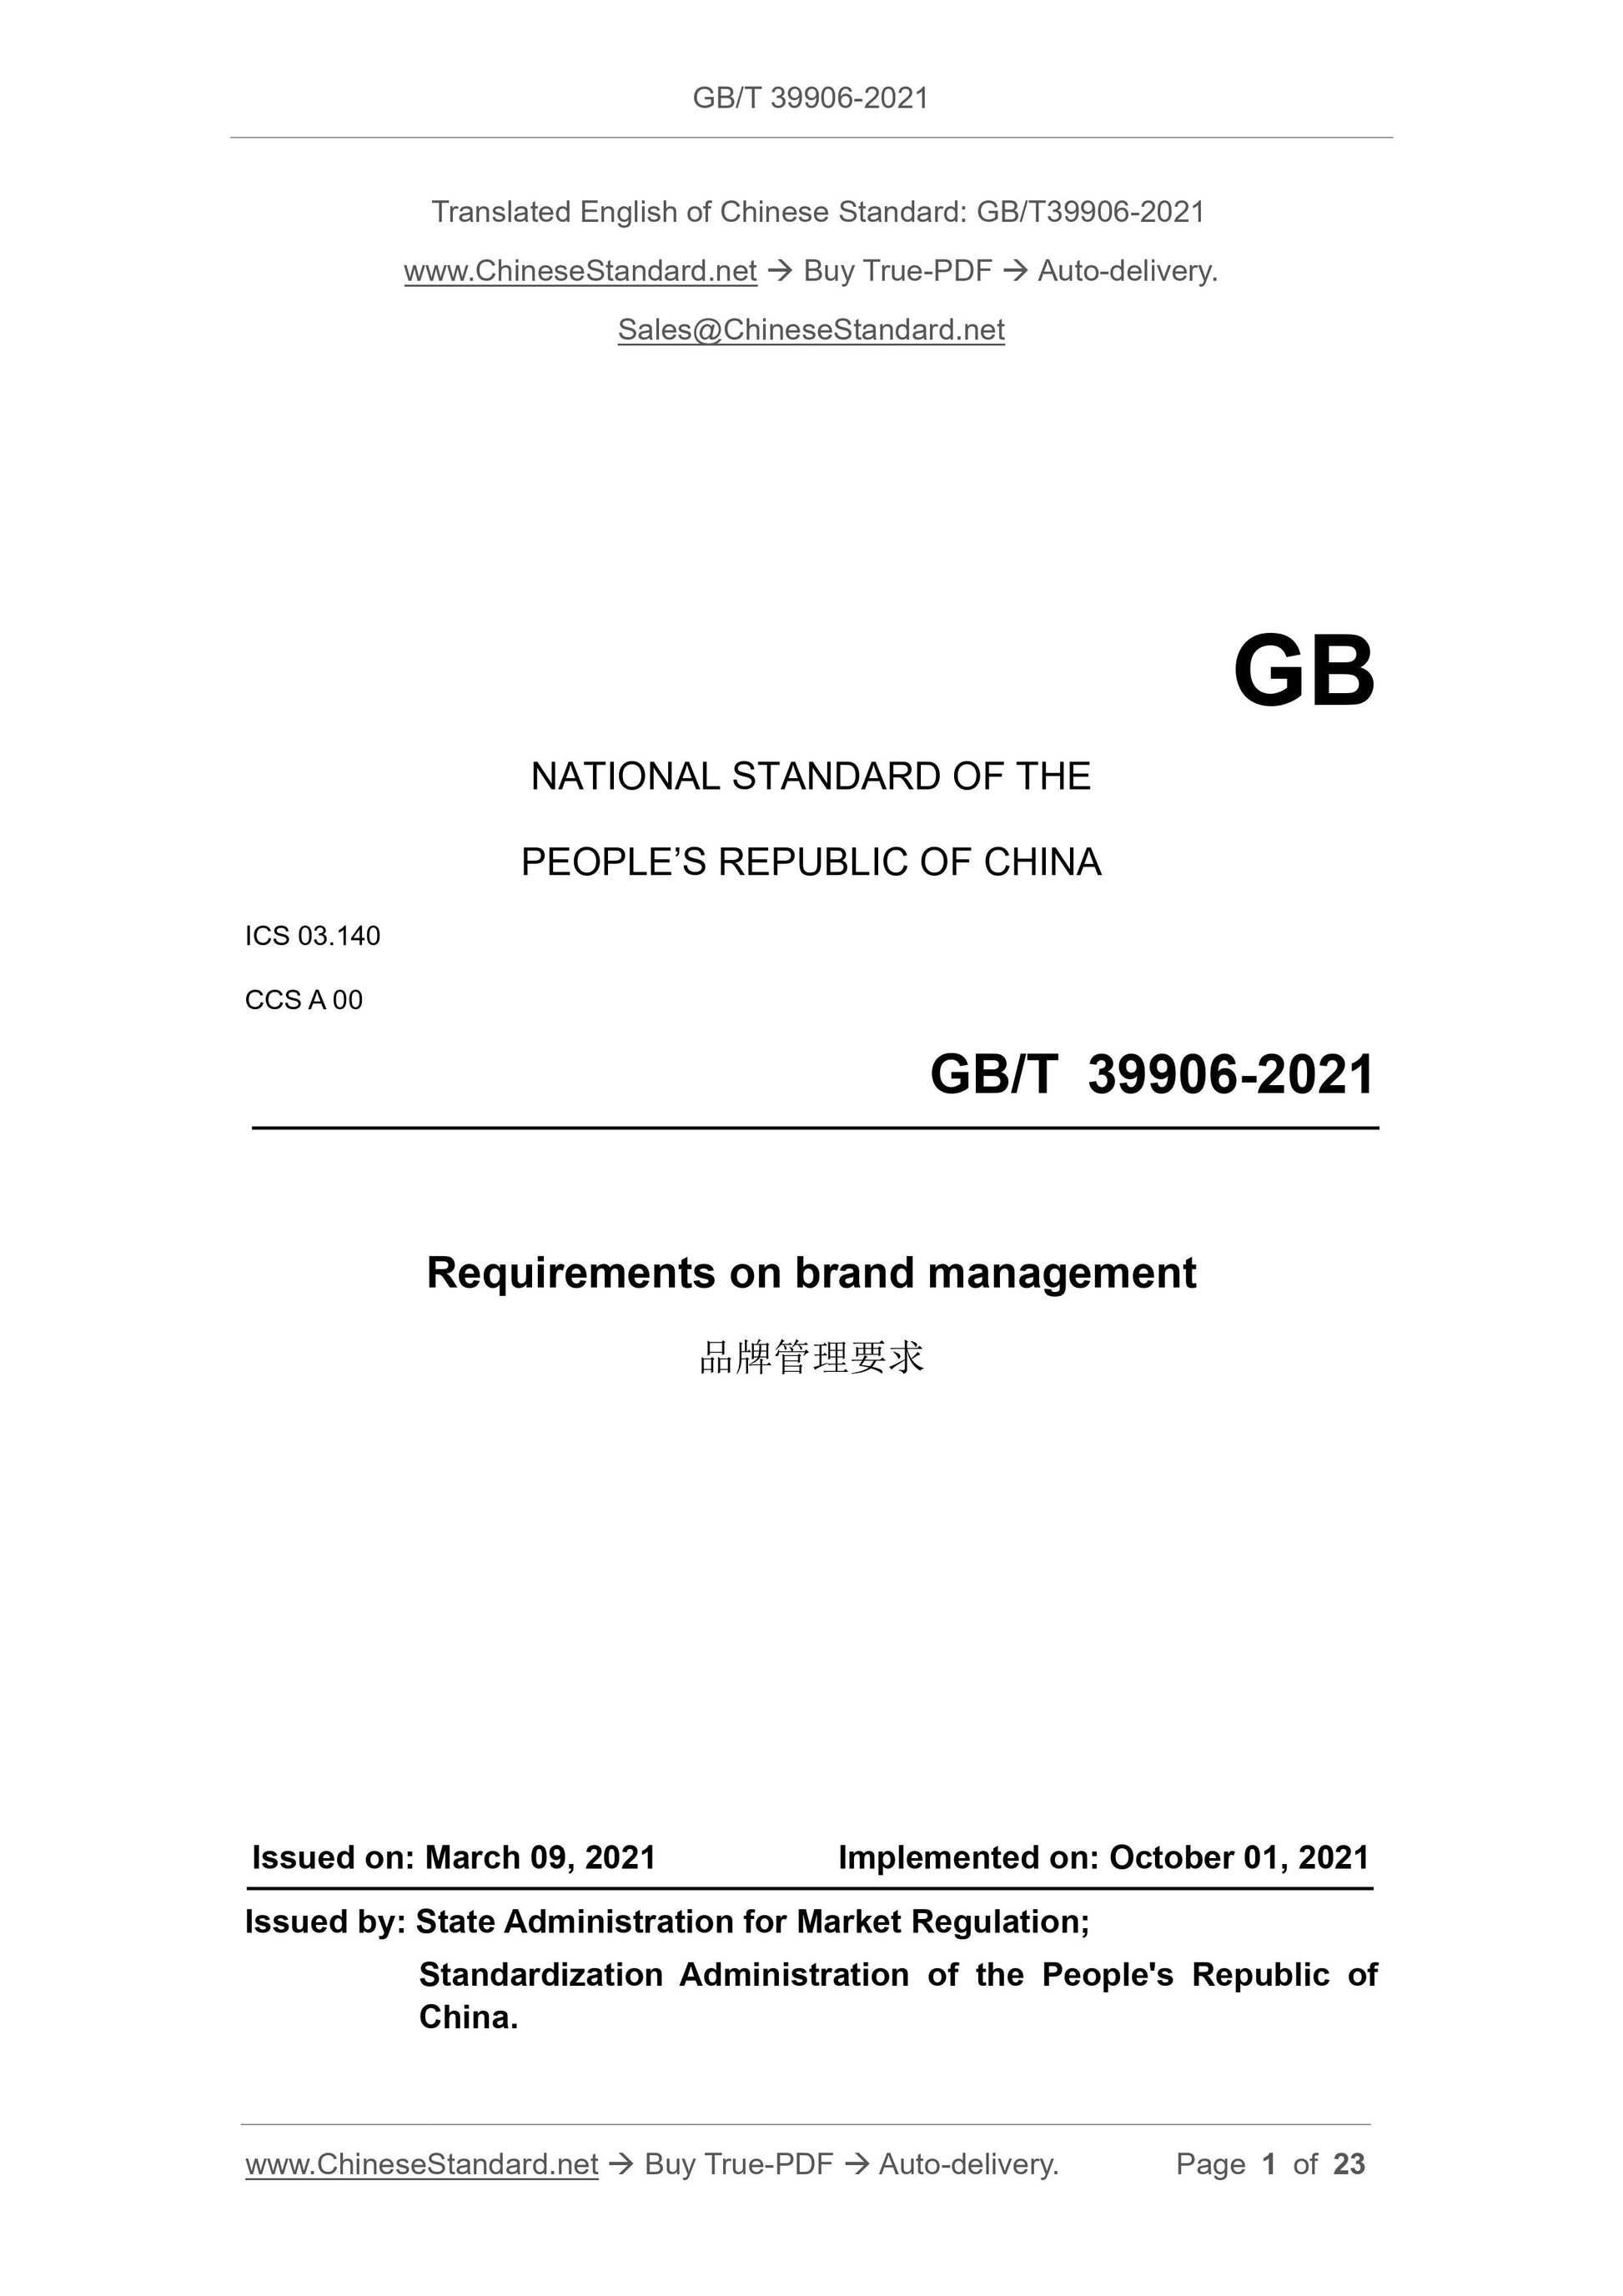 GBT39906-2021 Page 1